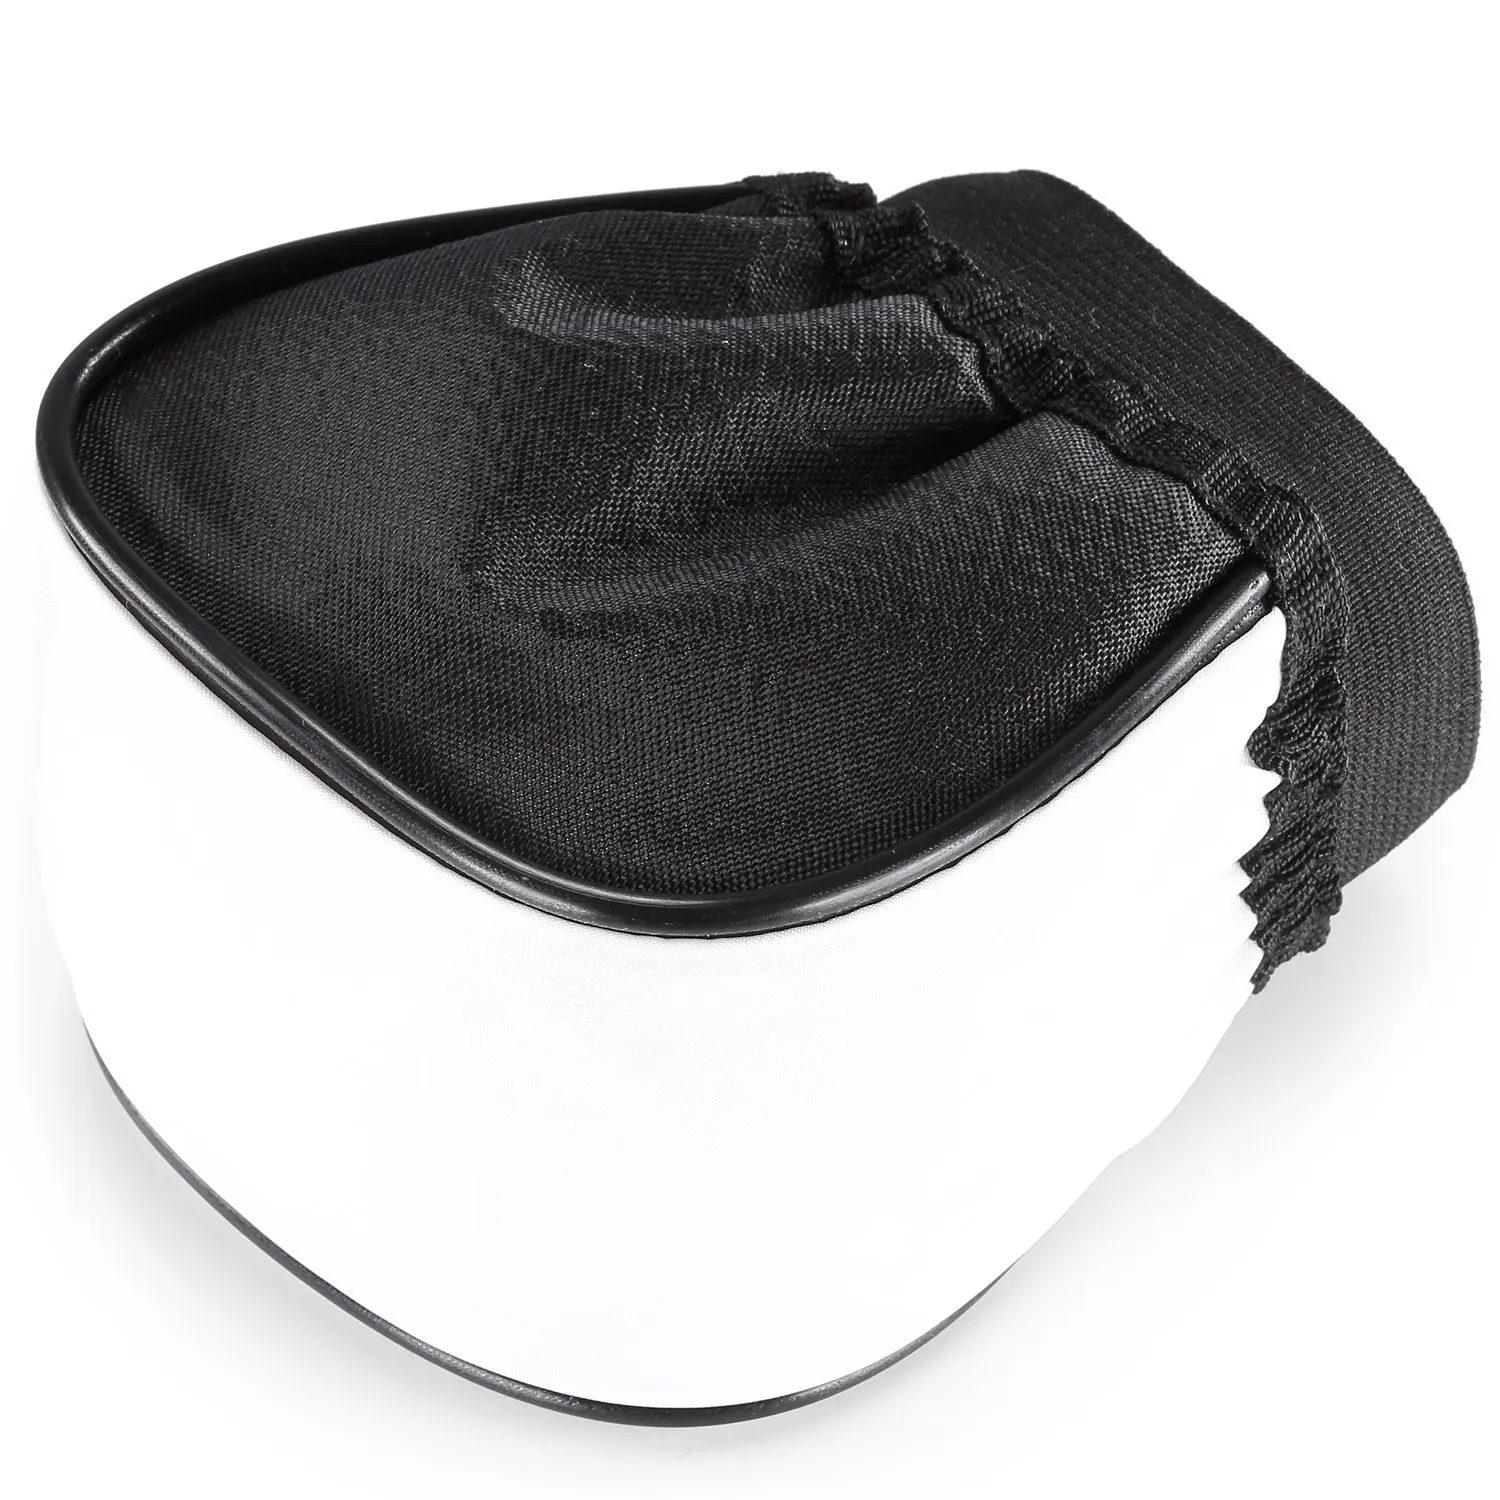 Soft Camera Flash Diffuser Portable Cloth Softbox for Speedlight Reflective Cover Cover Flash Accessories Black 